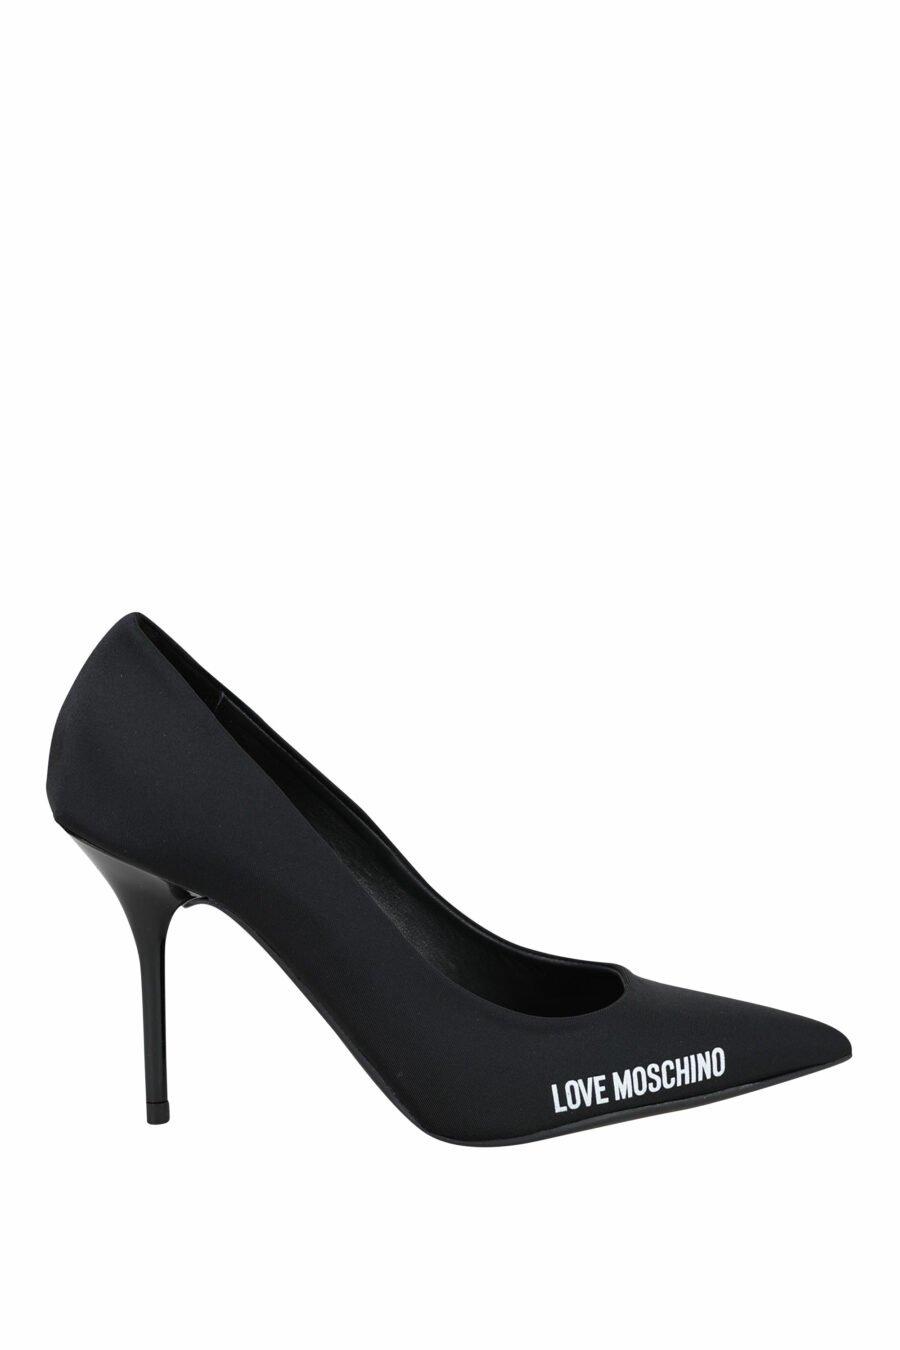 Love Moschino - Black heels with mini logo - BLS Fashion